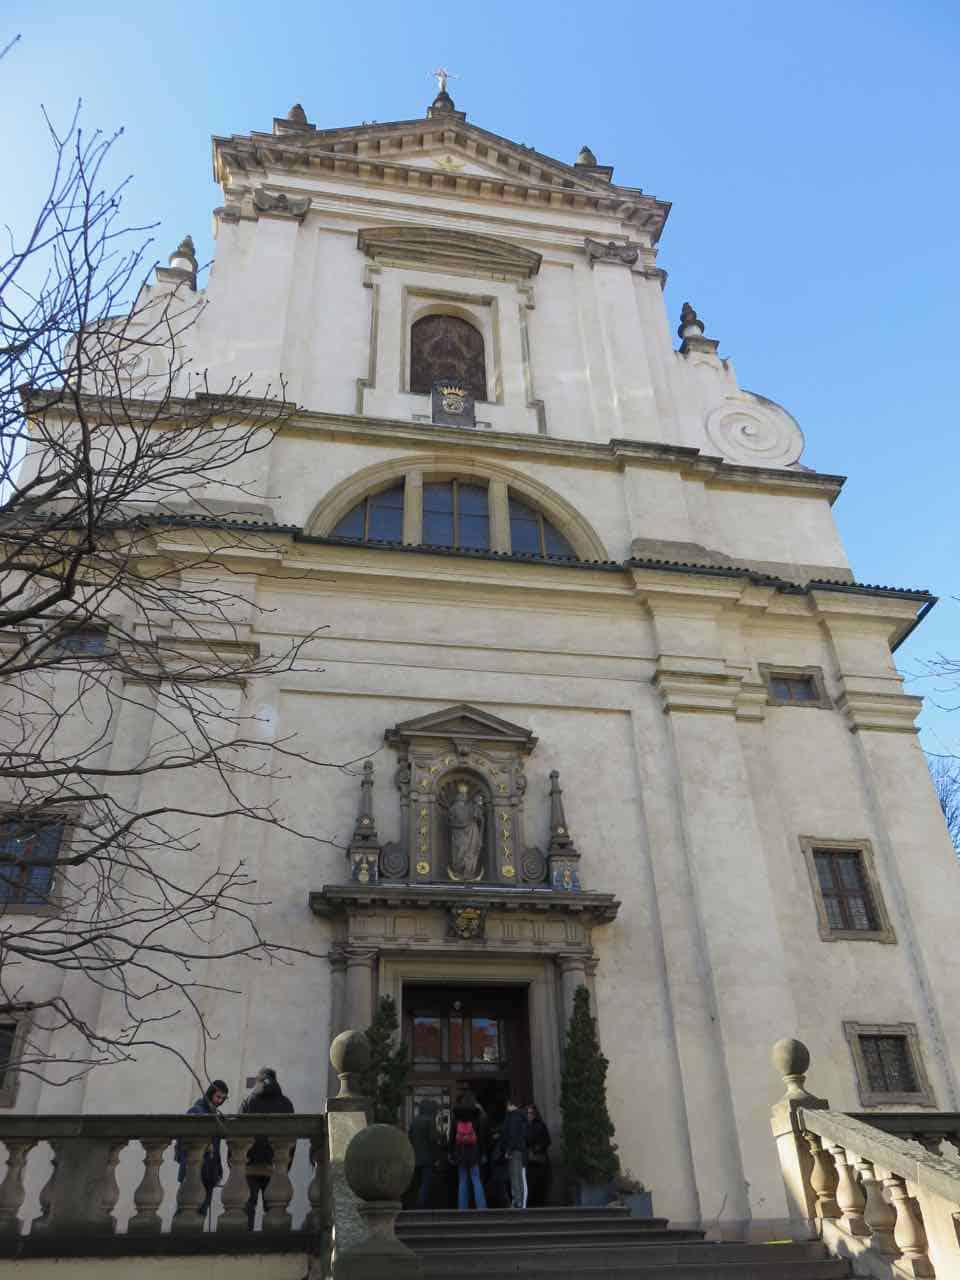 White stone facade of a church in Prague